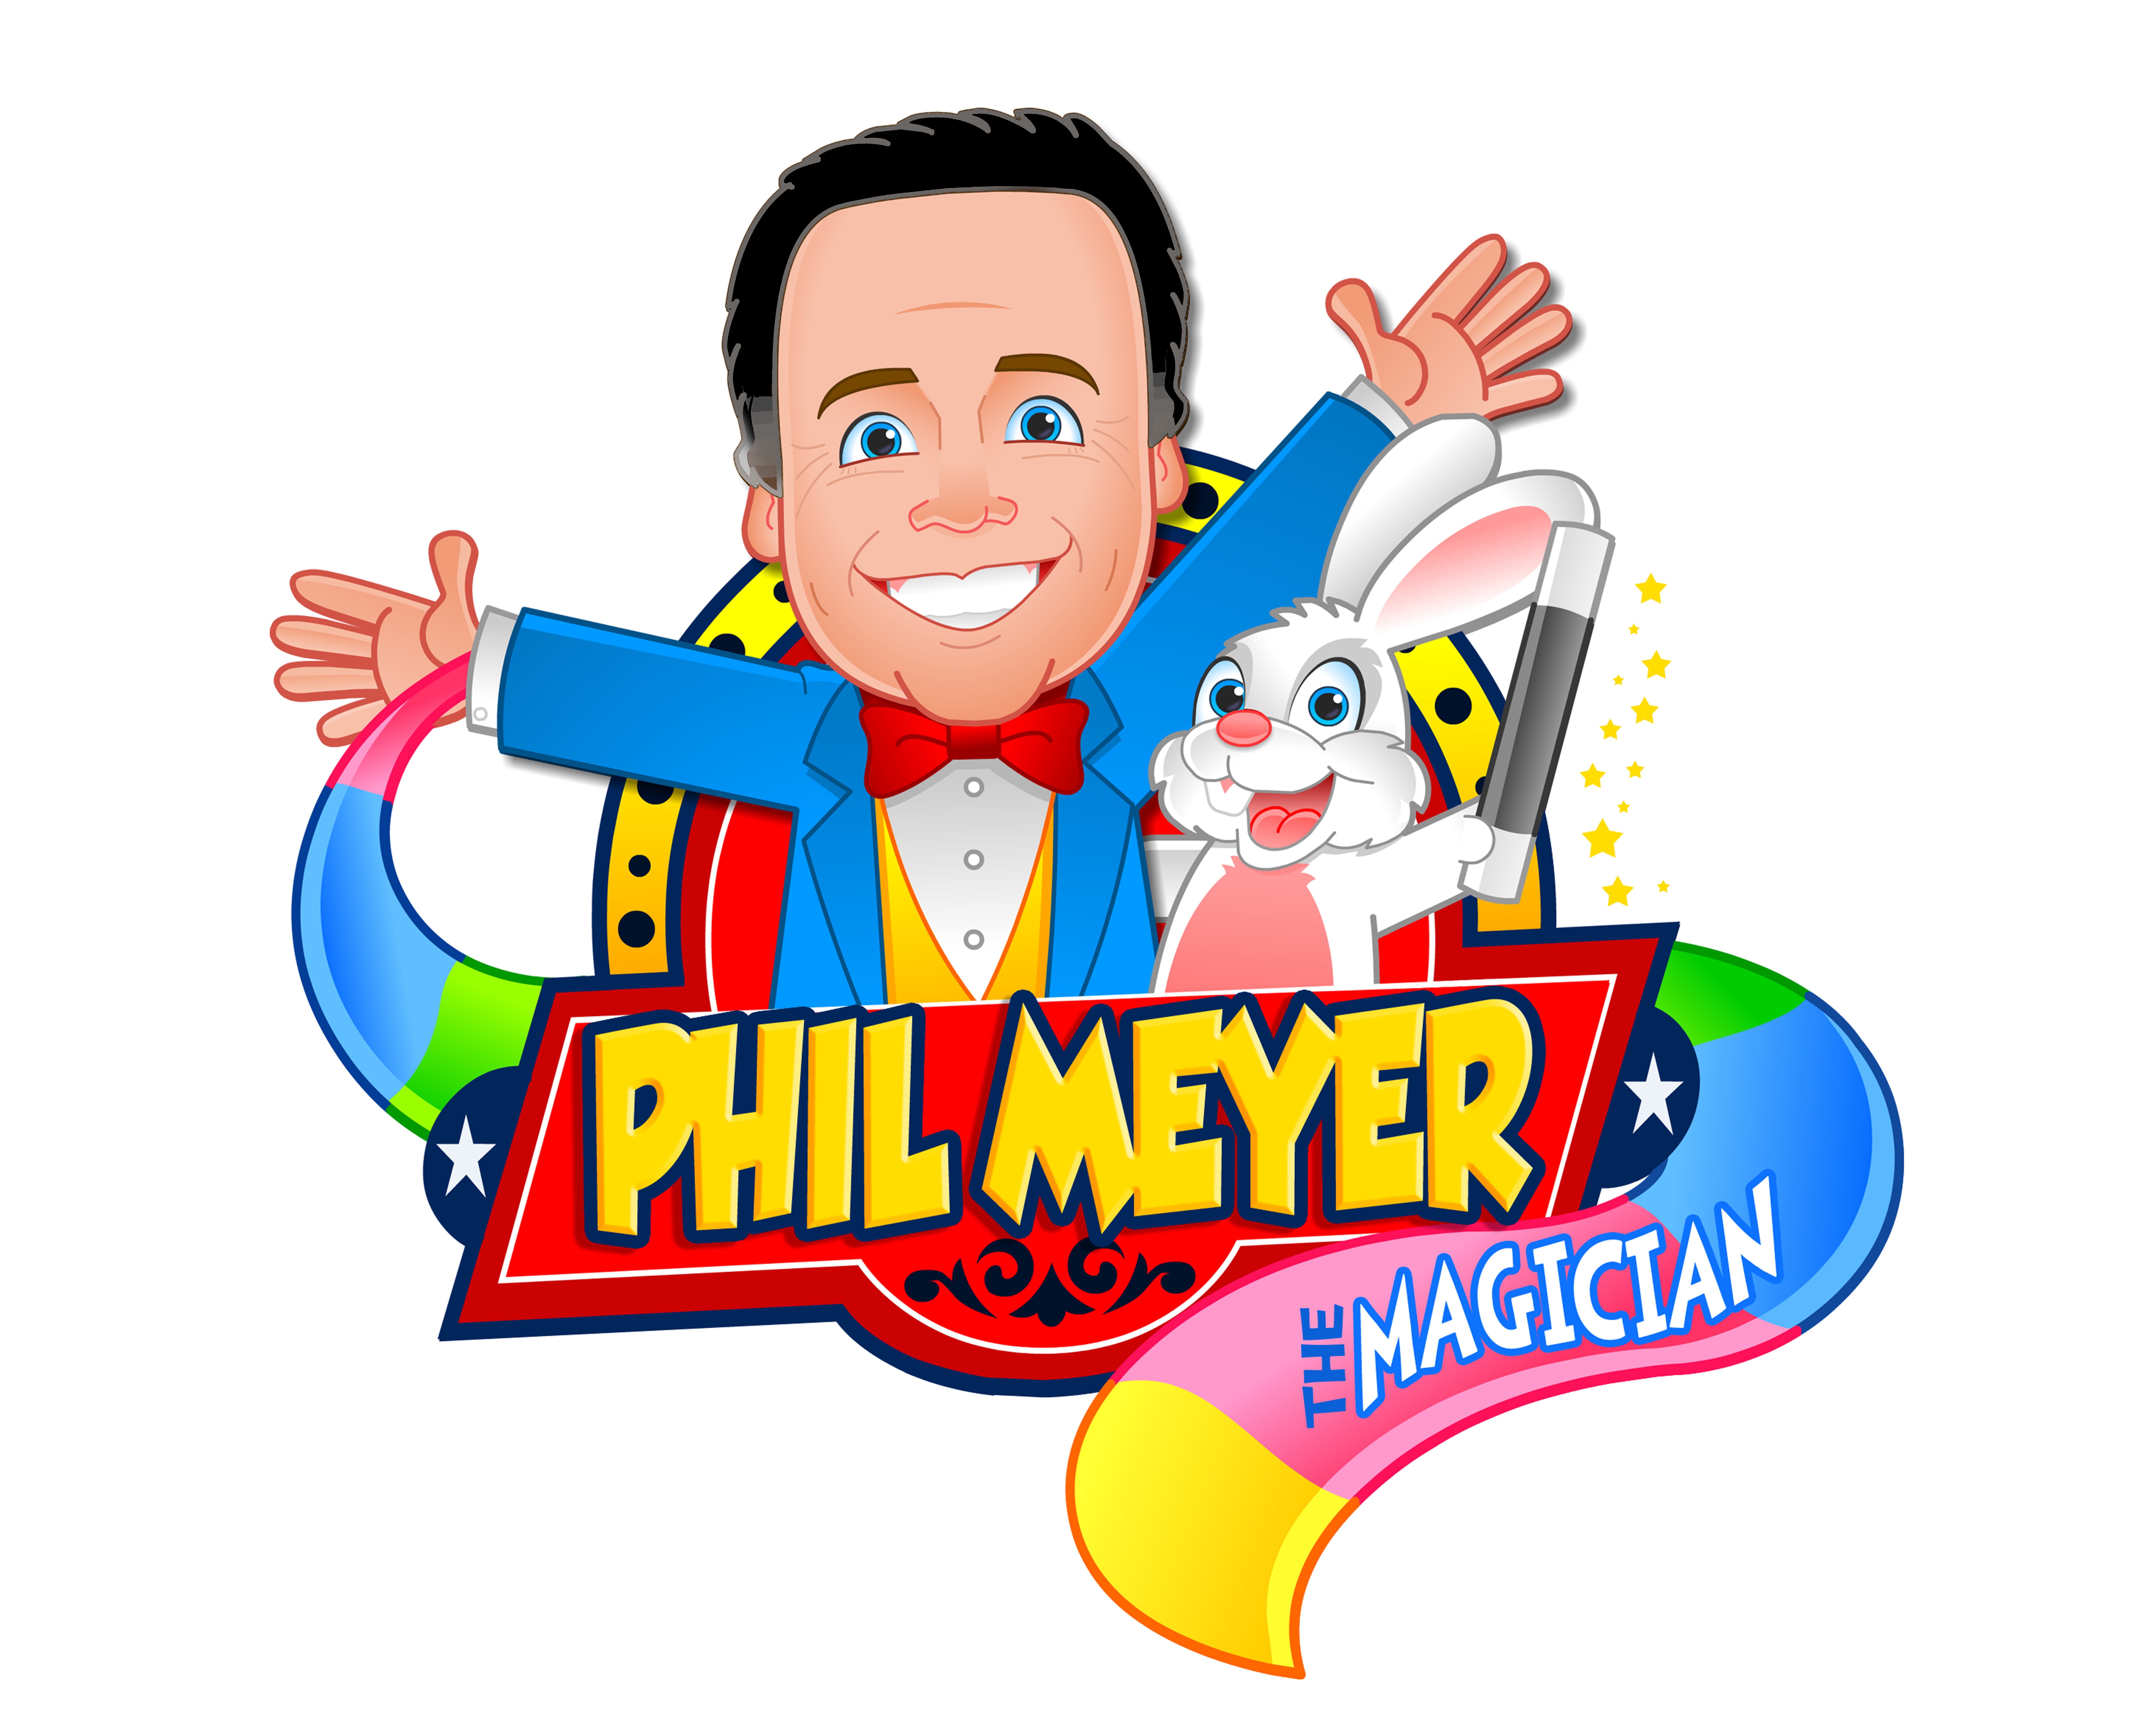 Phil Meyer Magic